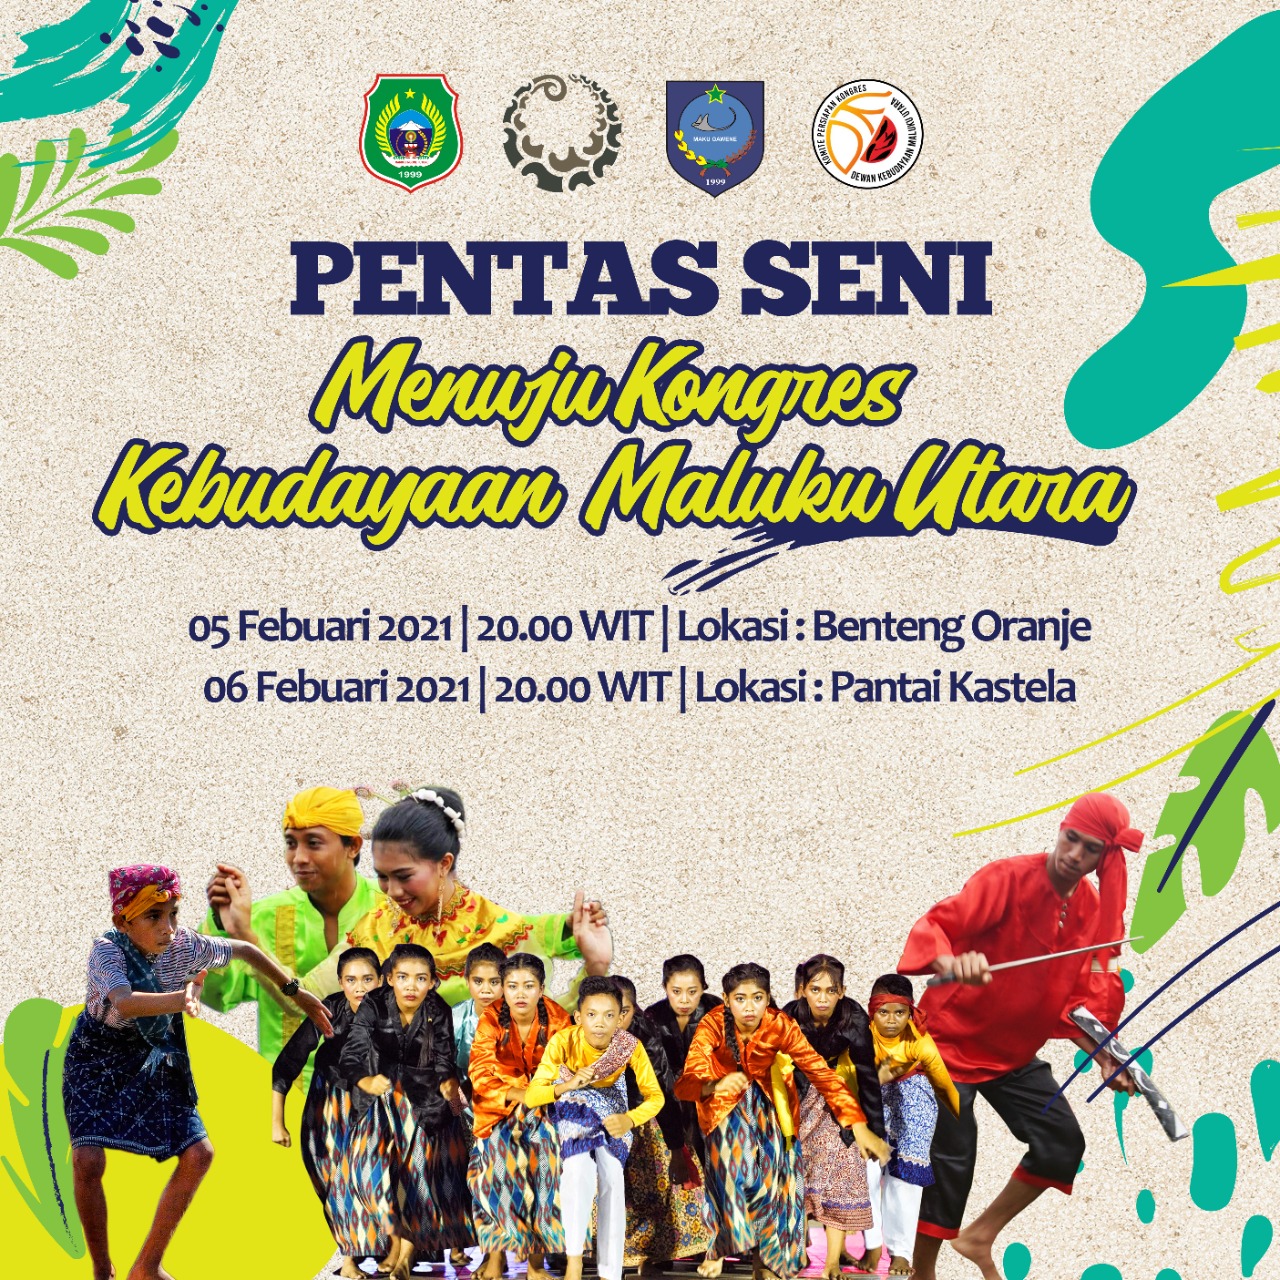 You are currently viewing Pentas Seni Menuju Kongres Kebudayaan Maluku Utara